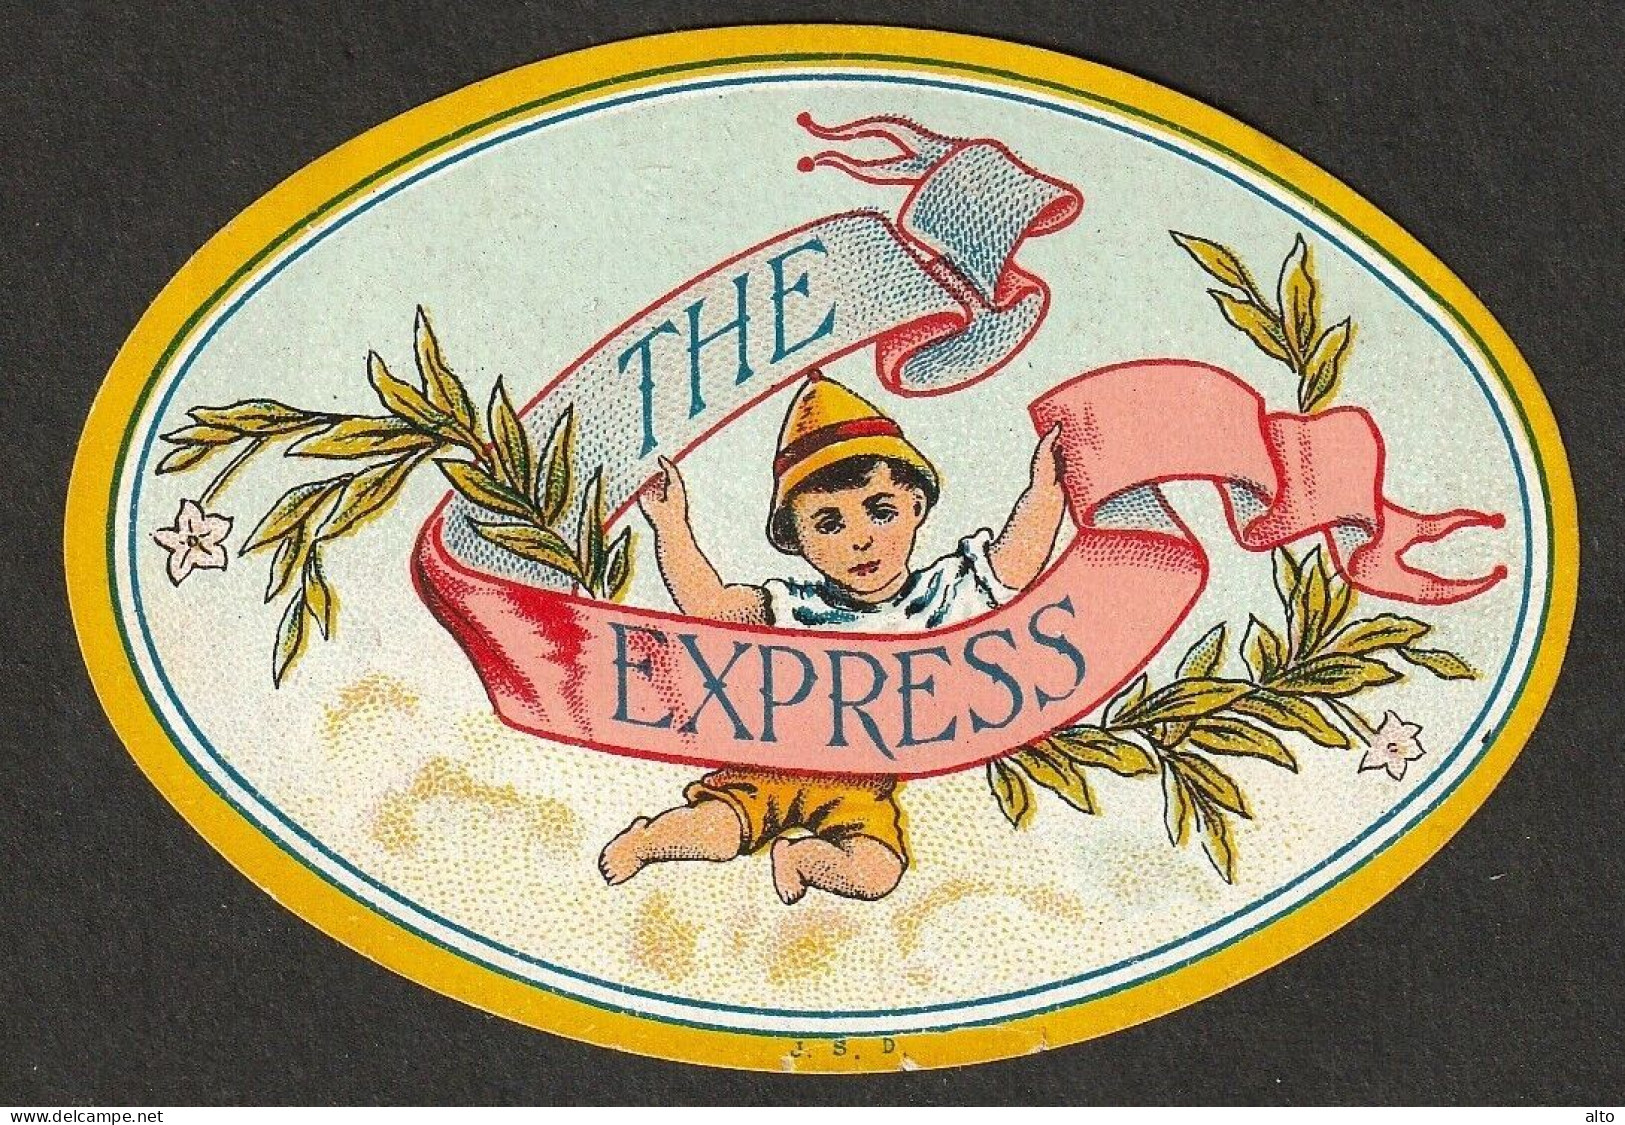 The Express, Ovales ETIKETT, Cigar Label, Nail, - Etiquettes